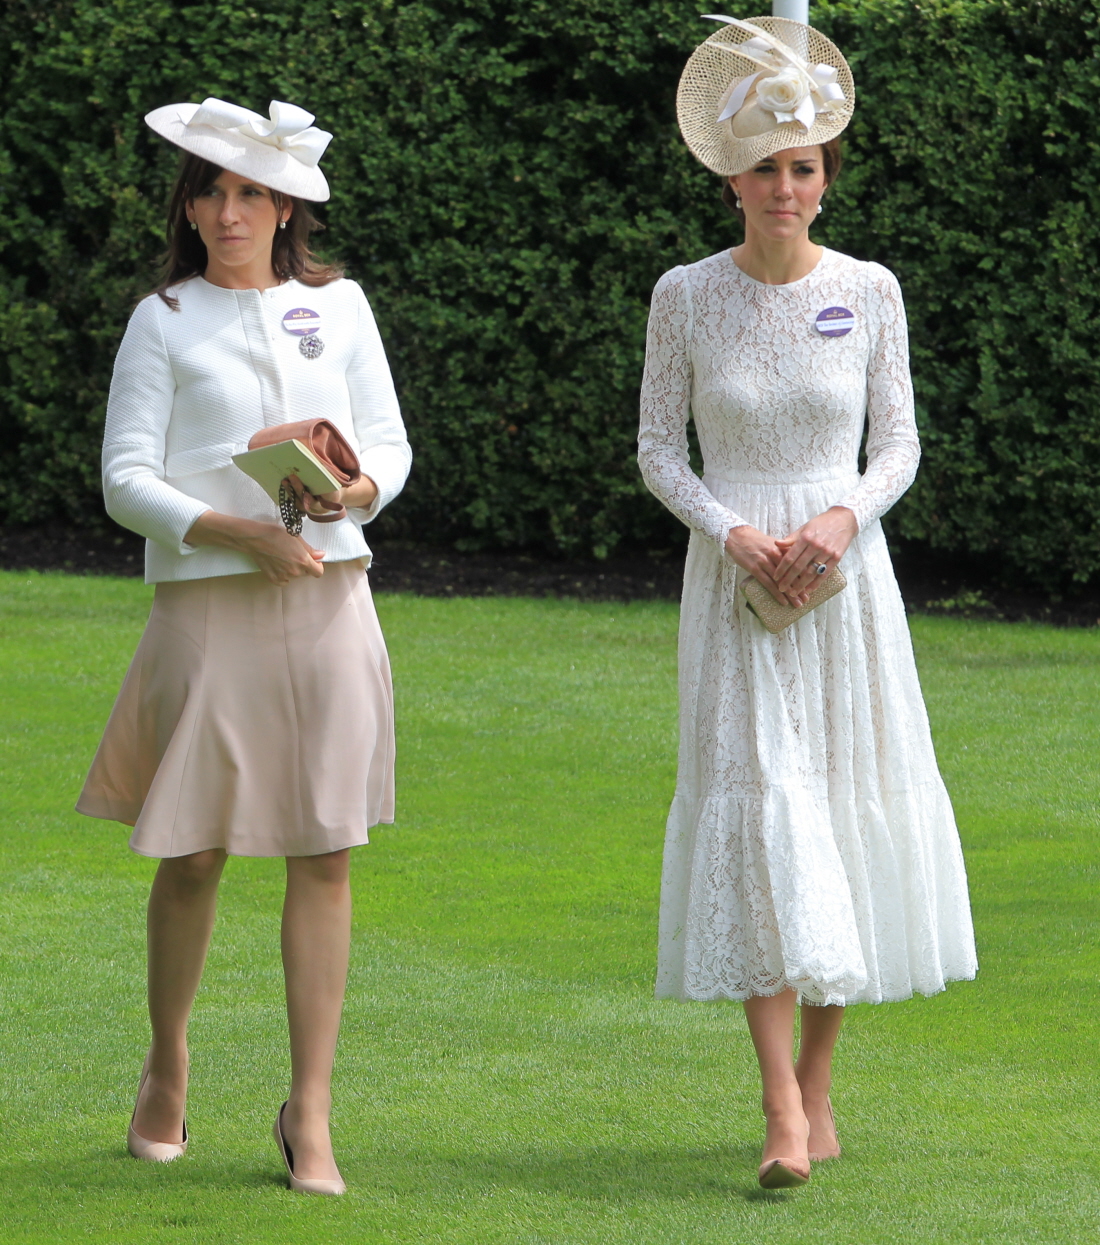 Герцогиня Кейт в Dolce & Gabbana за 3450 фунтов стерлингов для Royal Ascot: салфетка или милая?